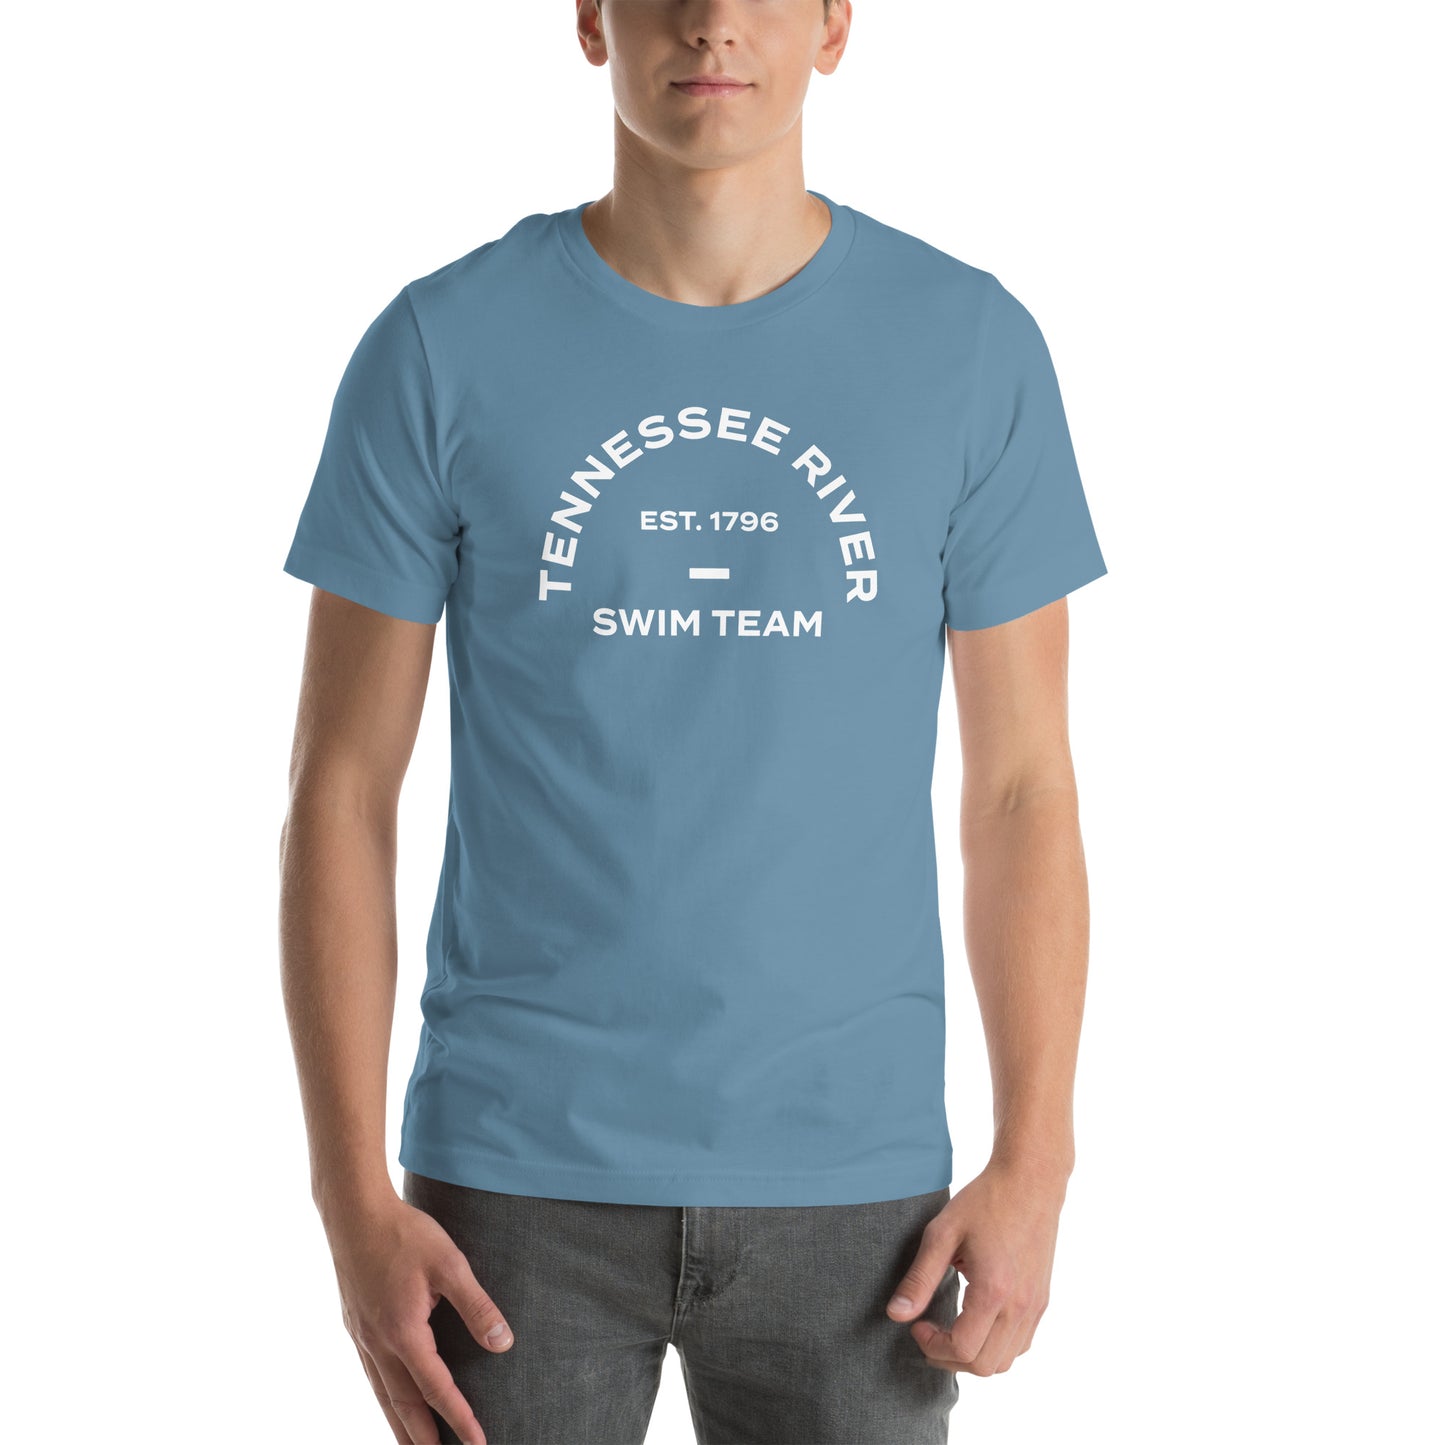 Tennesee River Swim Team Short Sleeve Shirt